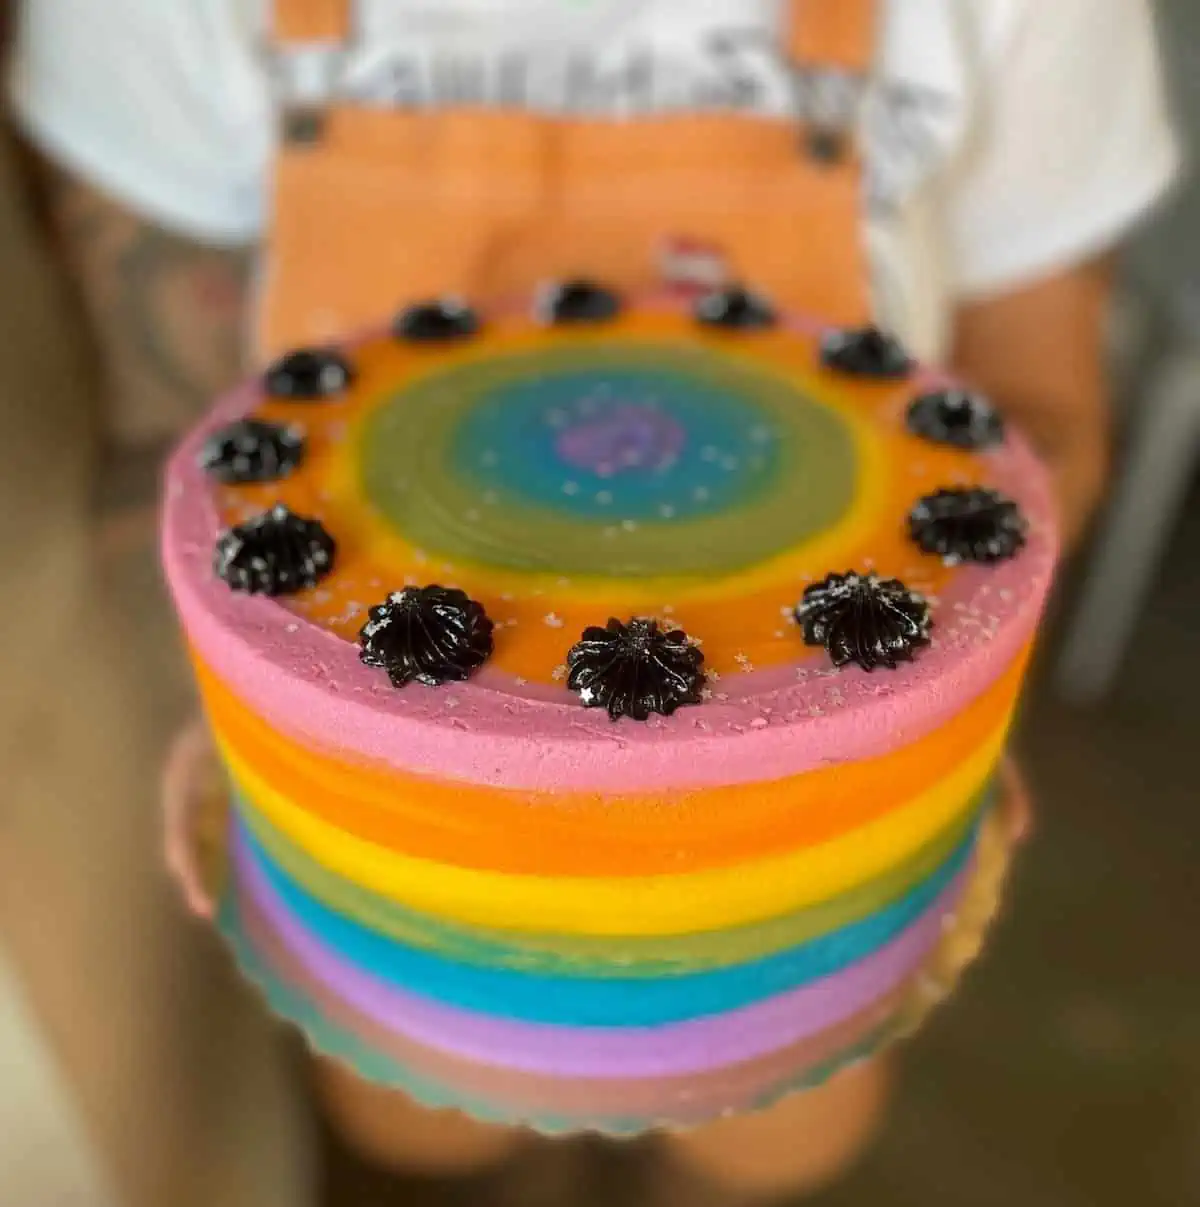 A pride cake from Shoofly Vegan Bakery in Portland.